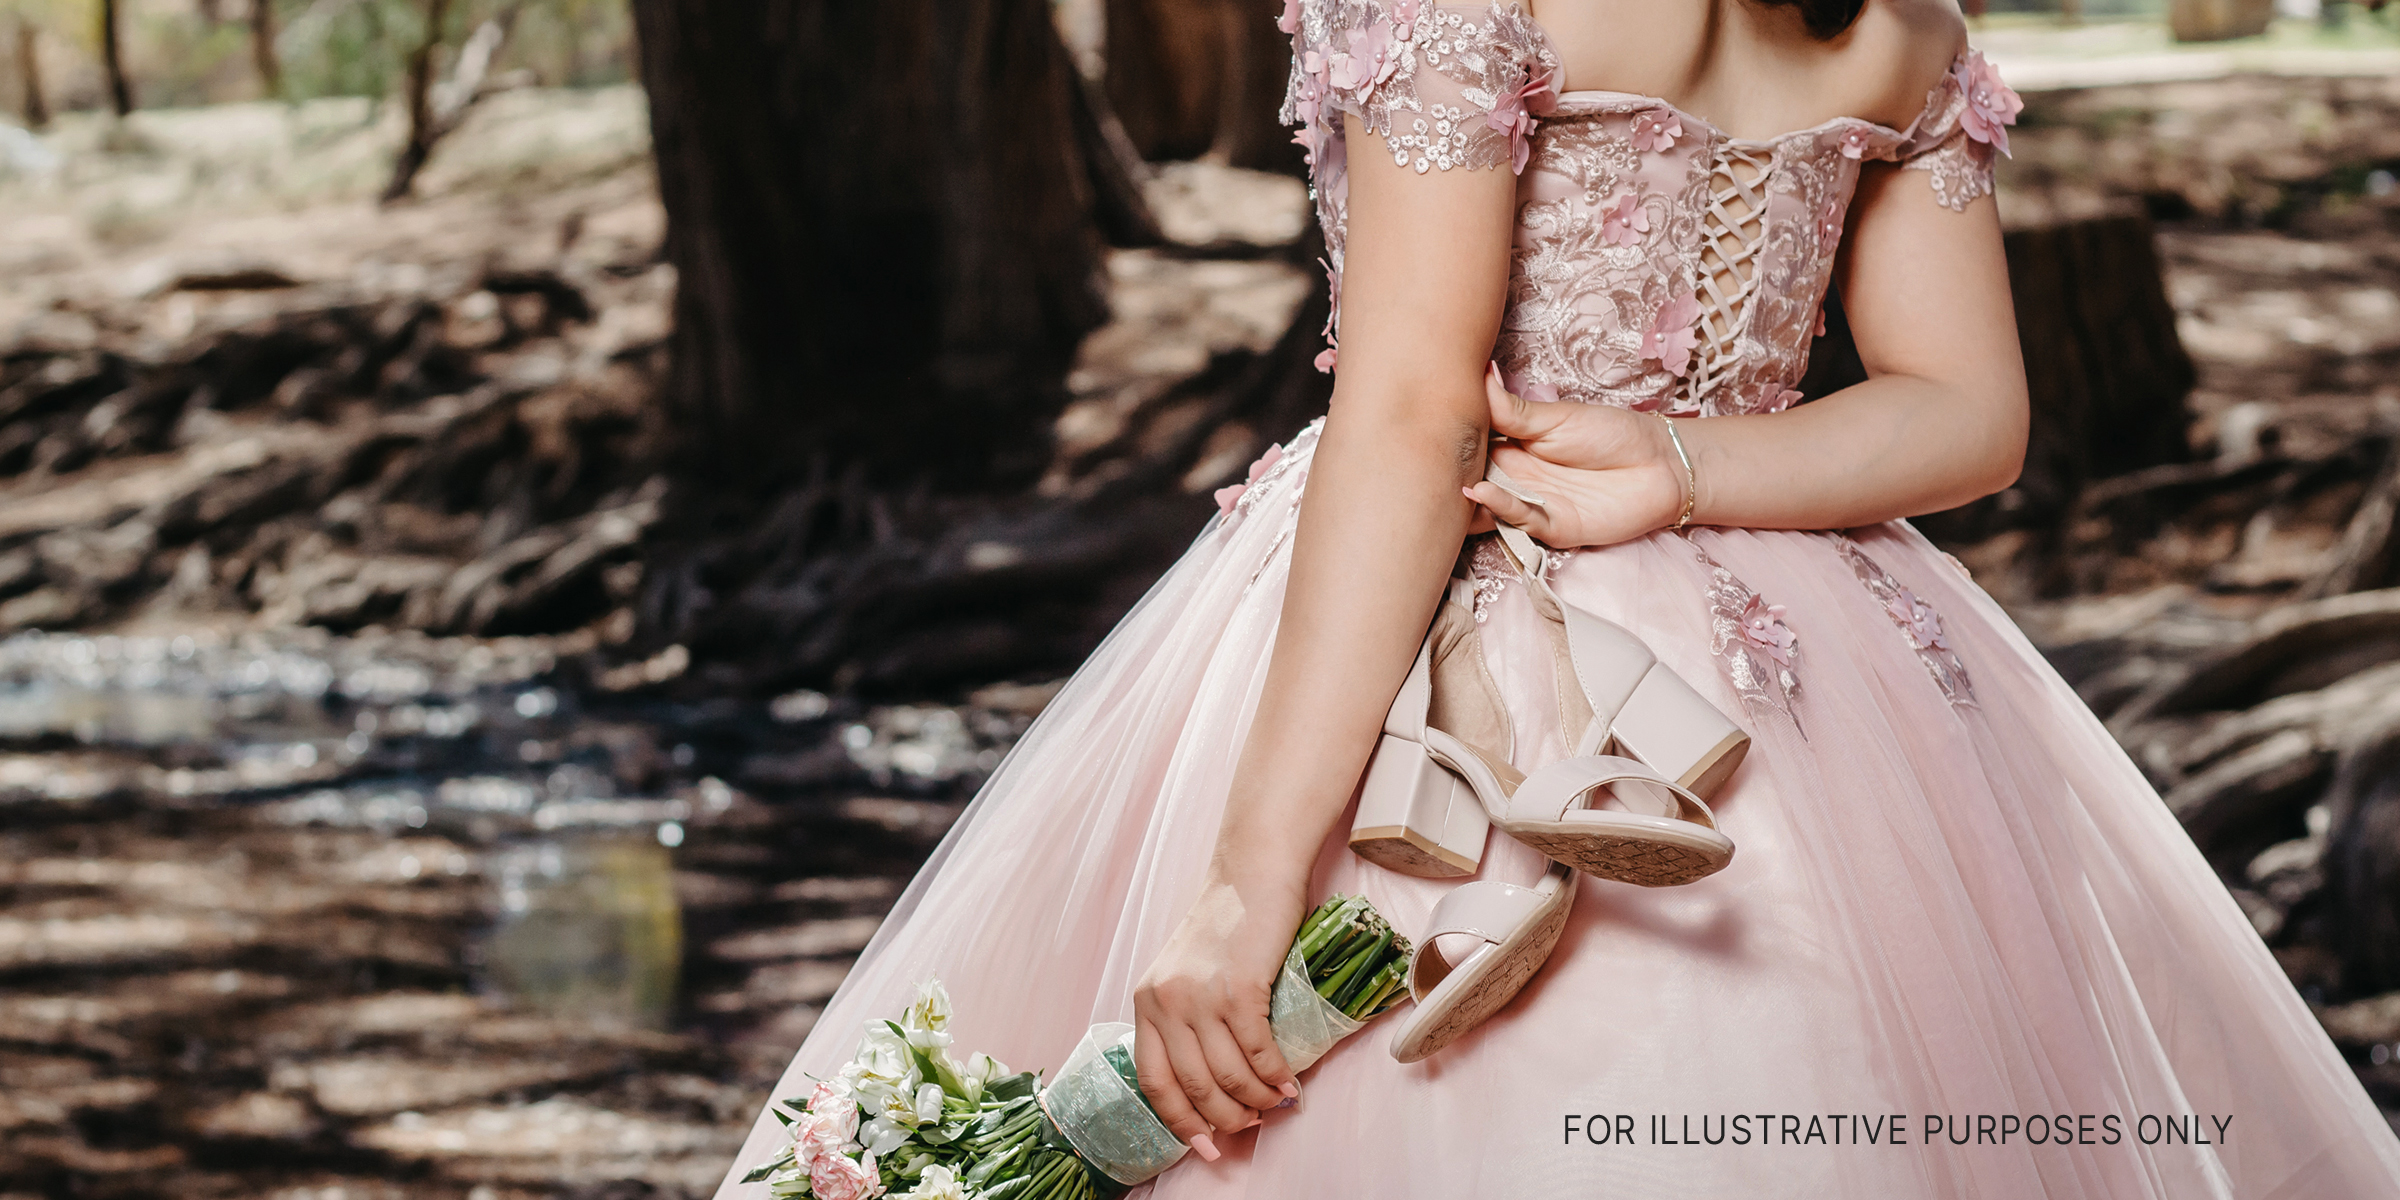 Girl in a pretty dress | Source: Shutterstock